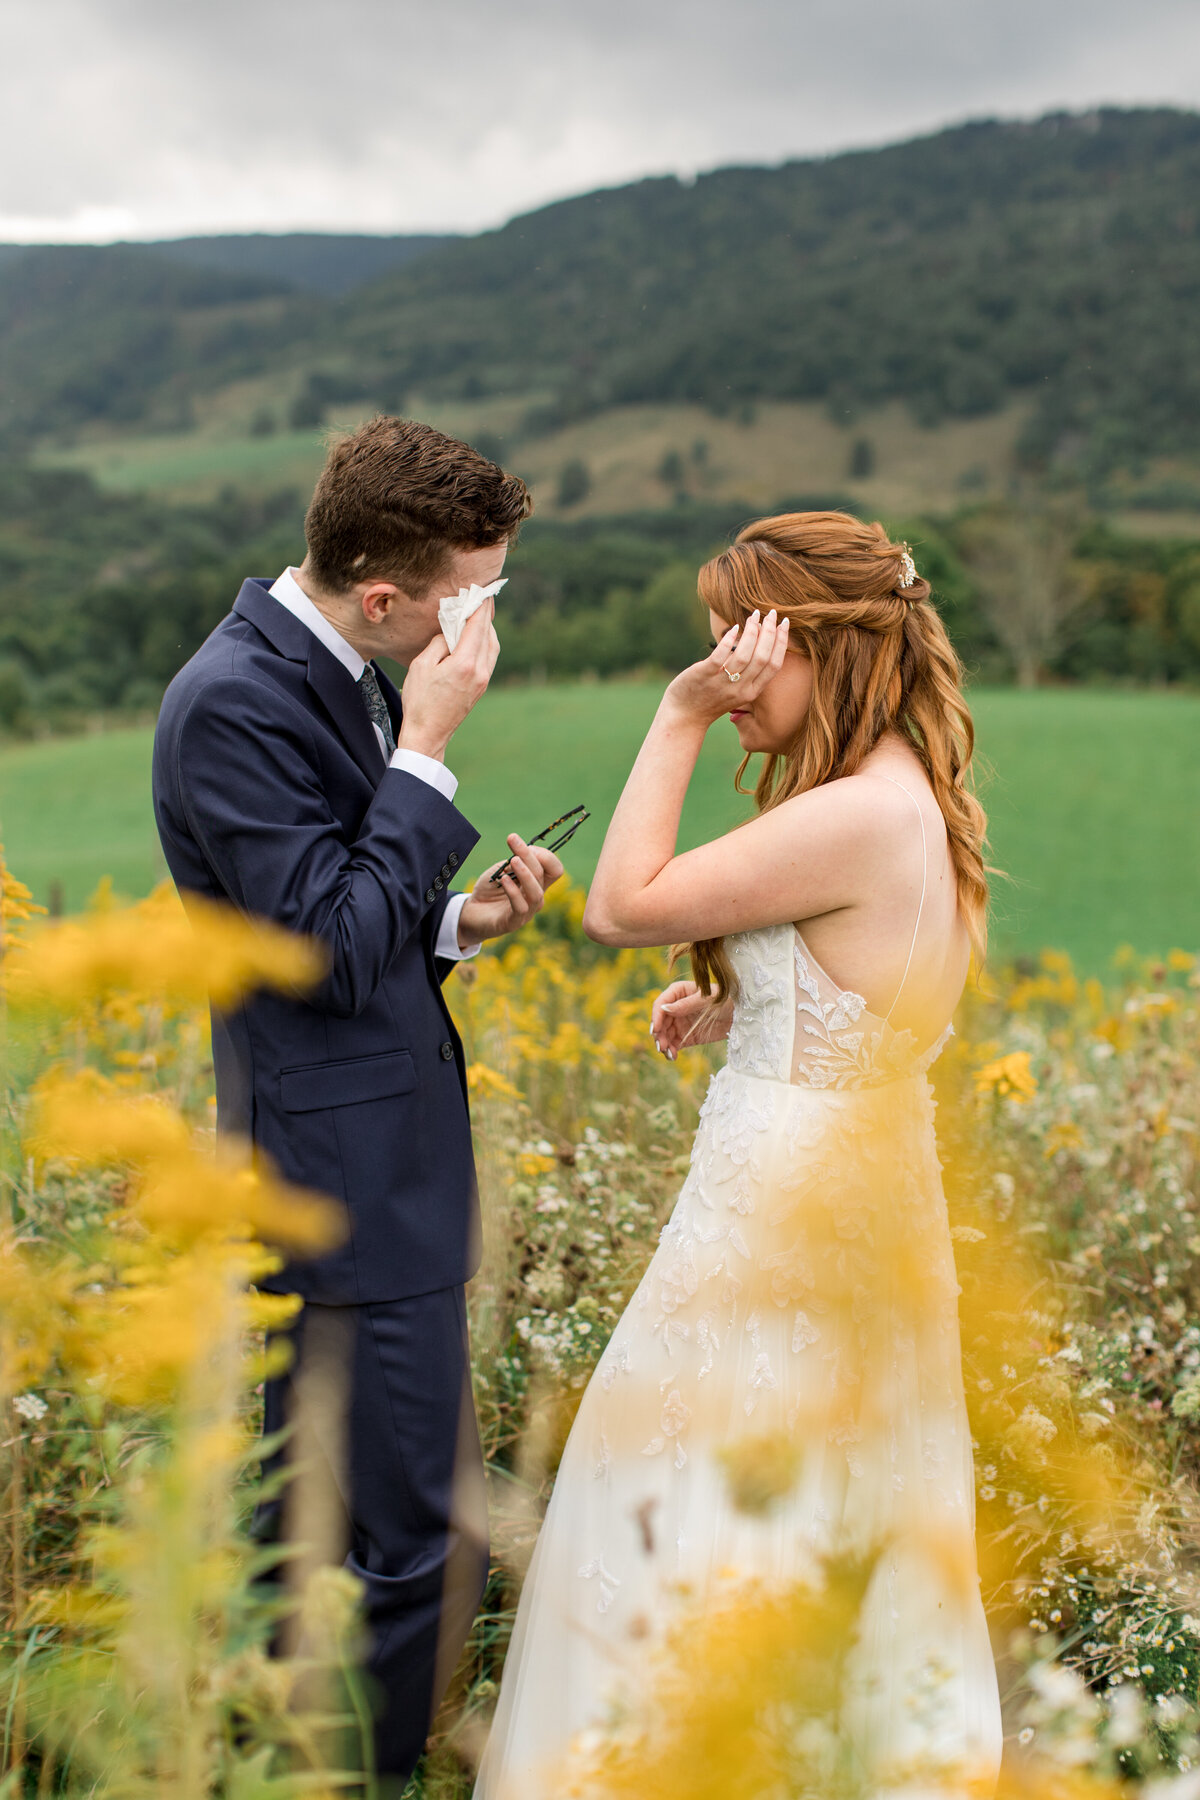 Wedding photo in Boone, NC of a bride & groom wiping their eyes emotionally on their wedding day